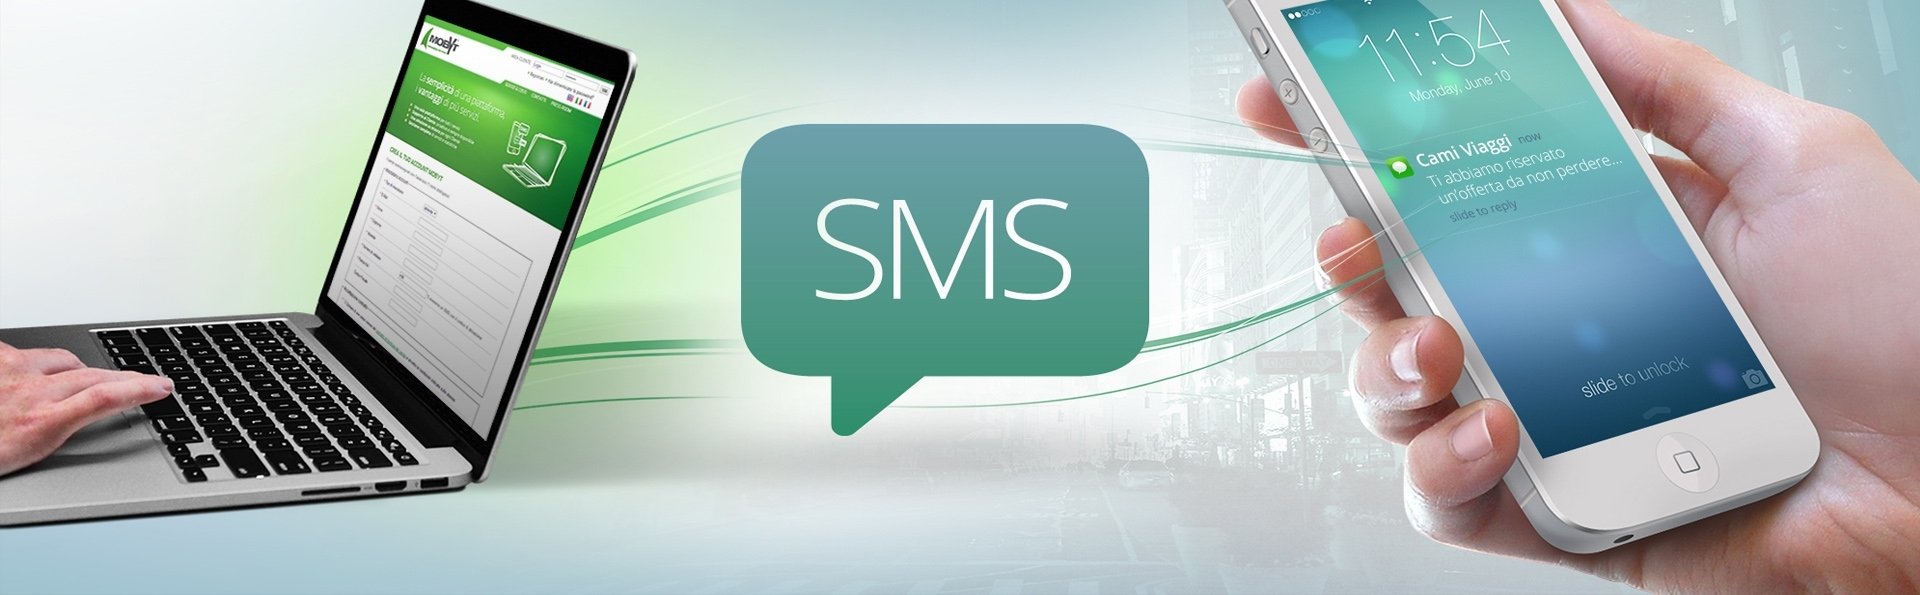 Sms leads. SMS активатор. Смс активация. Виртуальный номер SMS. Номера виртуальные для смс.